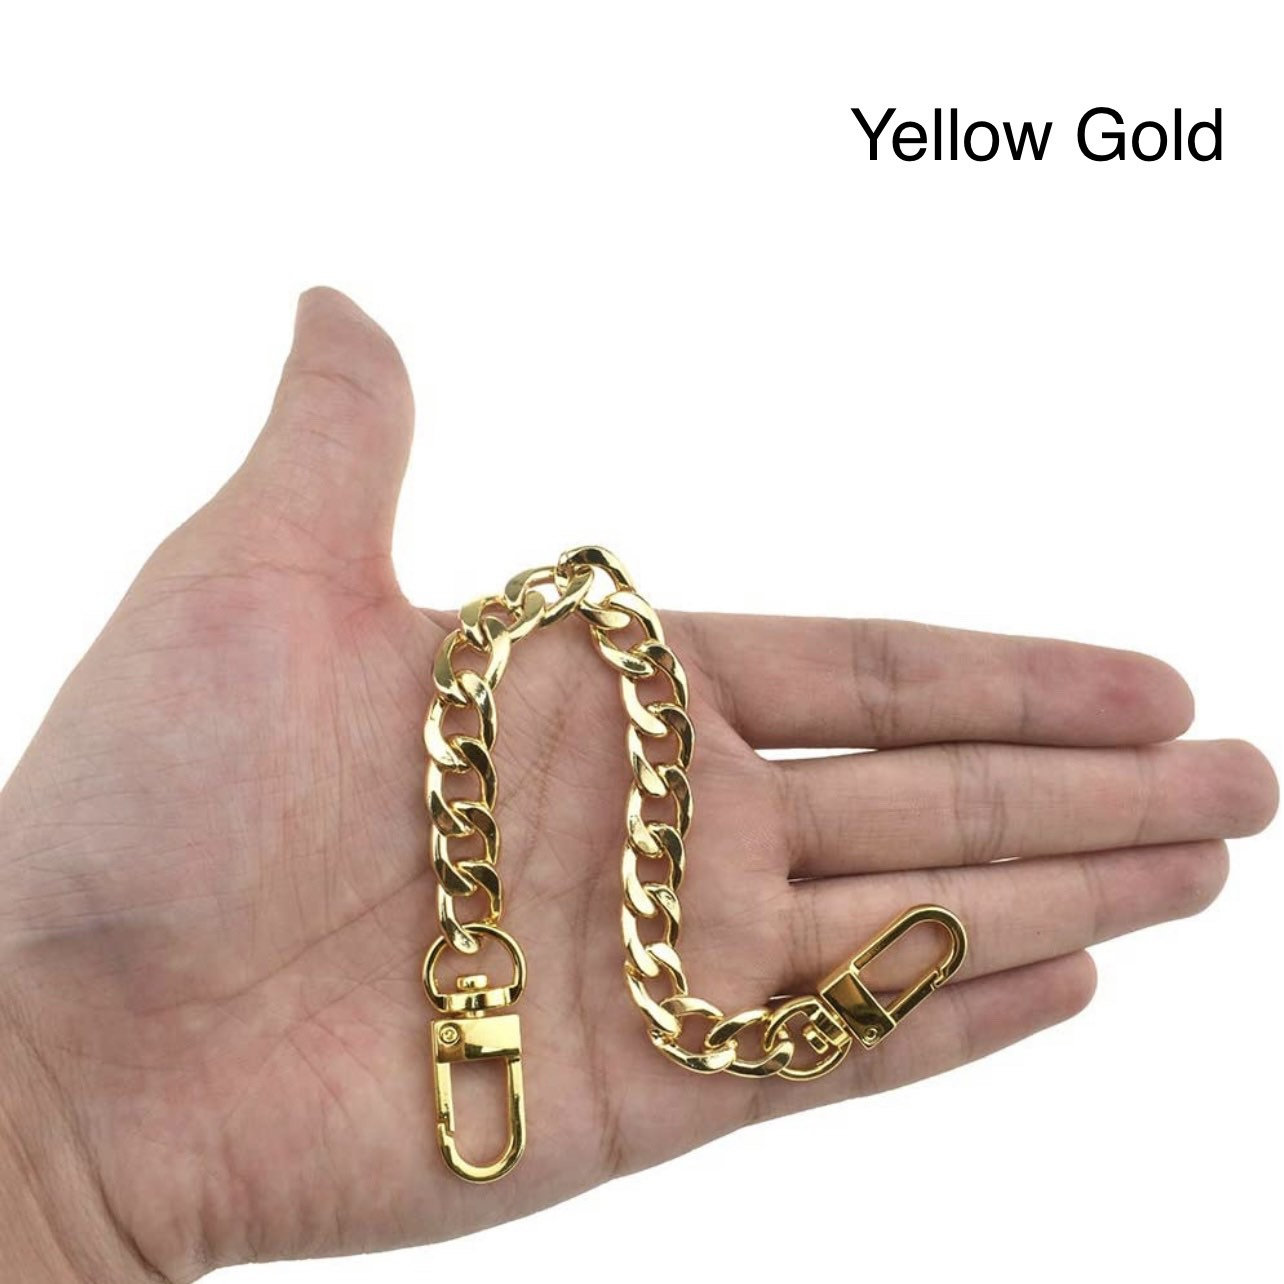 LOUIS VUITTON Short Chain Strap Gold 448033